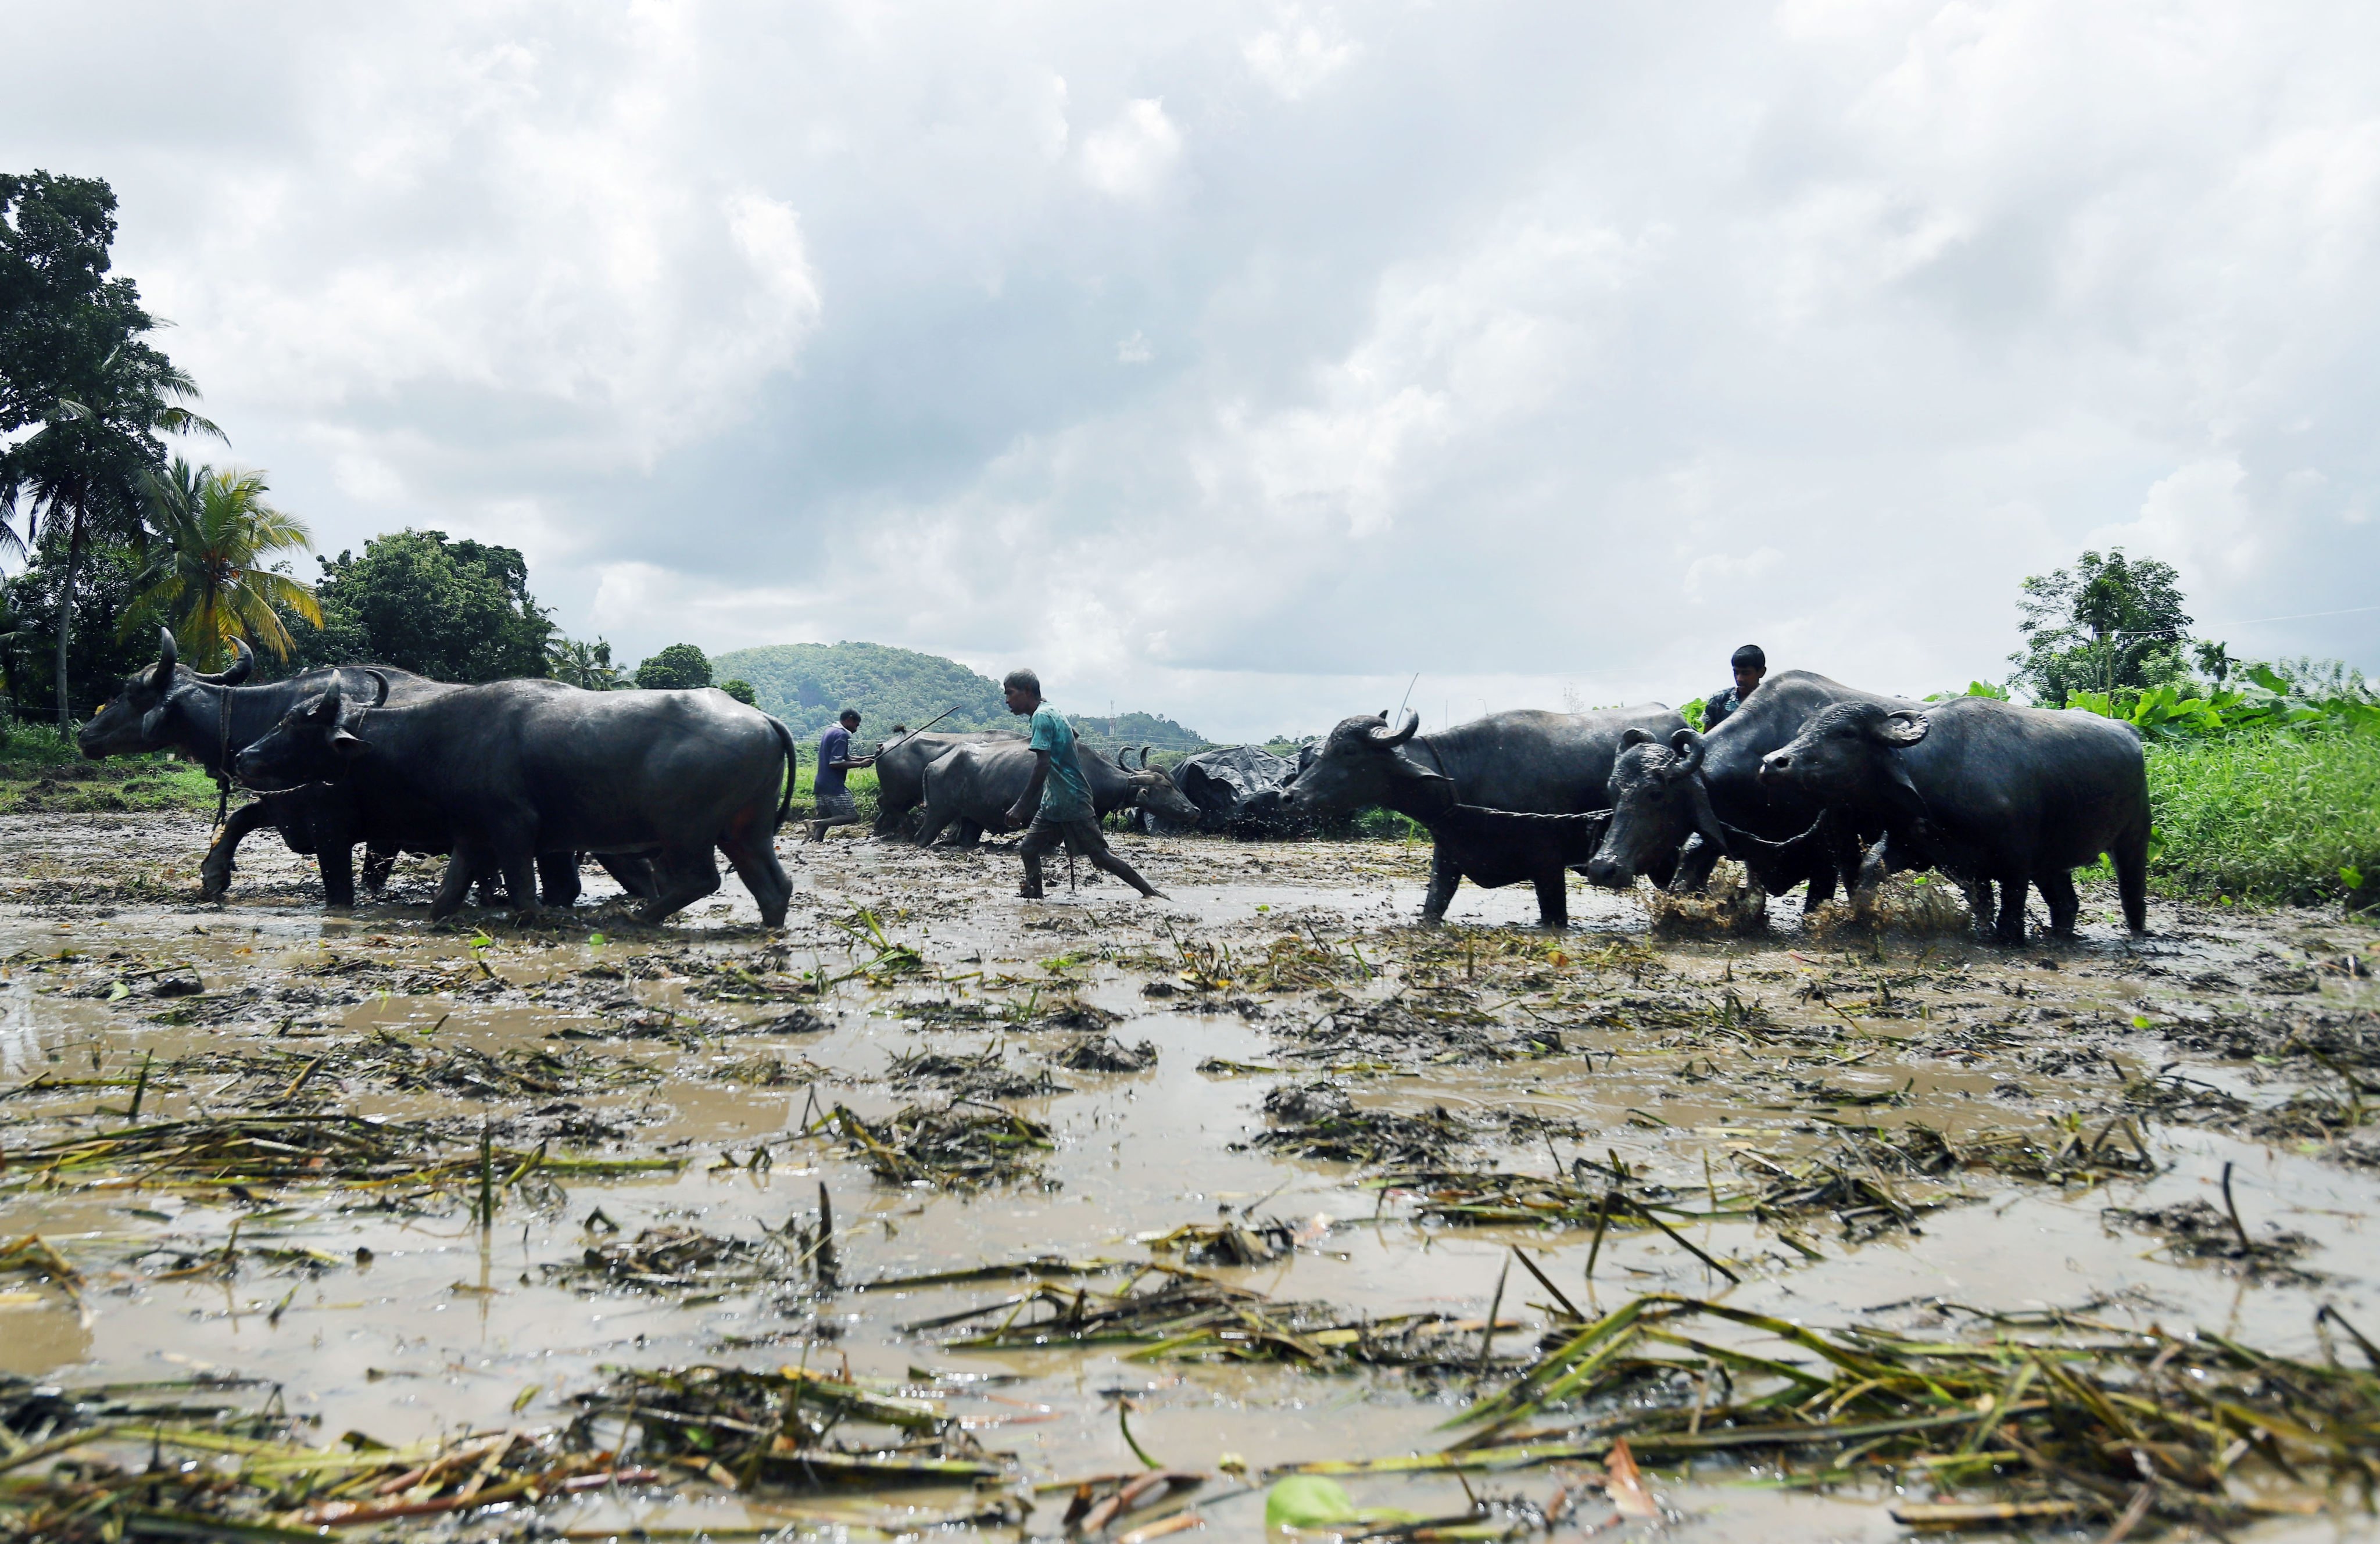 Farmers and buffalo work in paddy fields during the paddy cultivation season in Kaduwela, the suburbs of Colombo, Sri Lanka. Photo: Xinhua